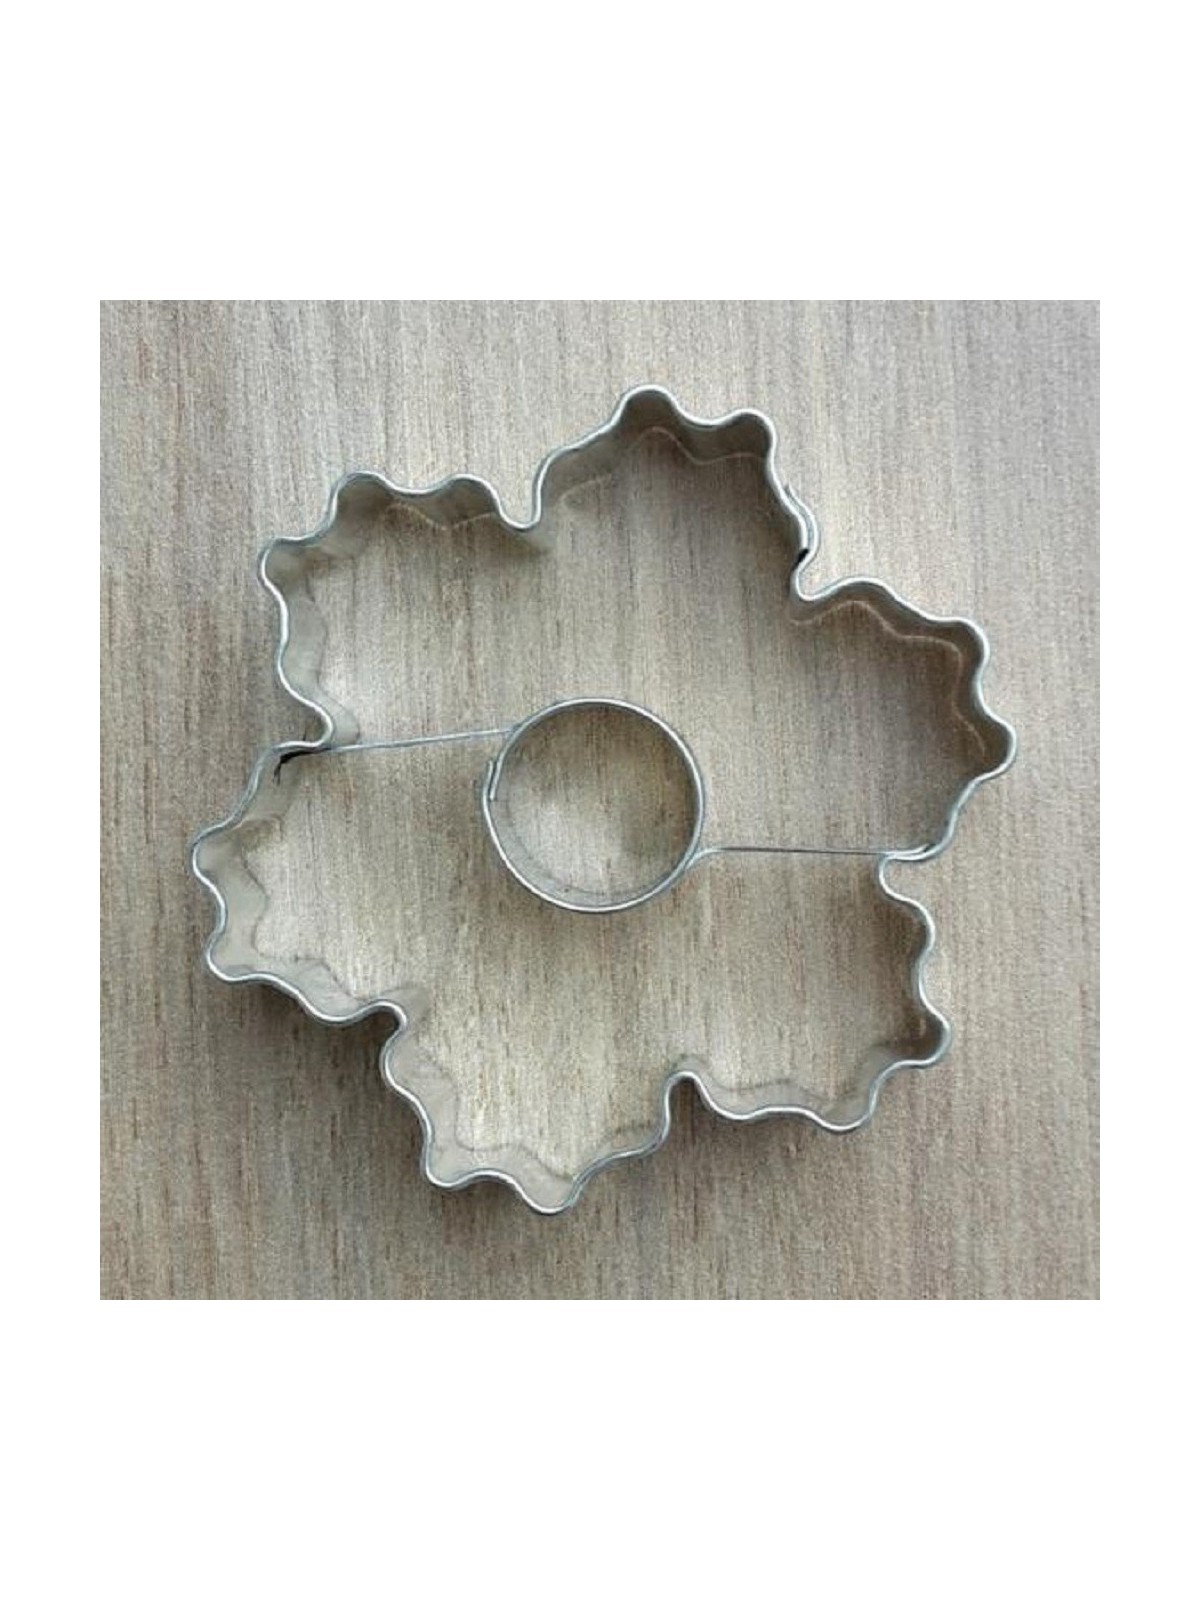 Cookie cutter - scalloped flower + wheel